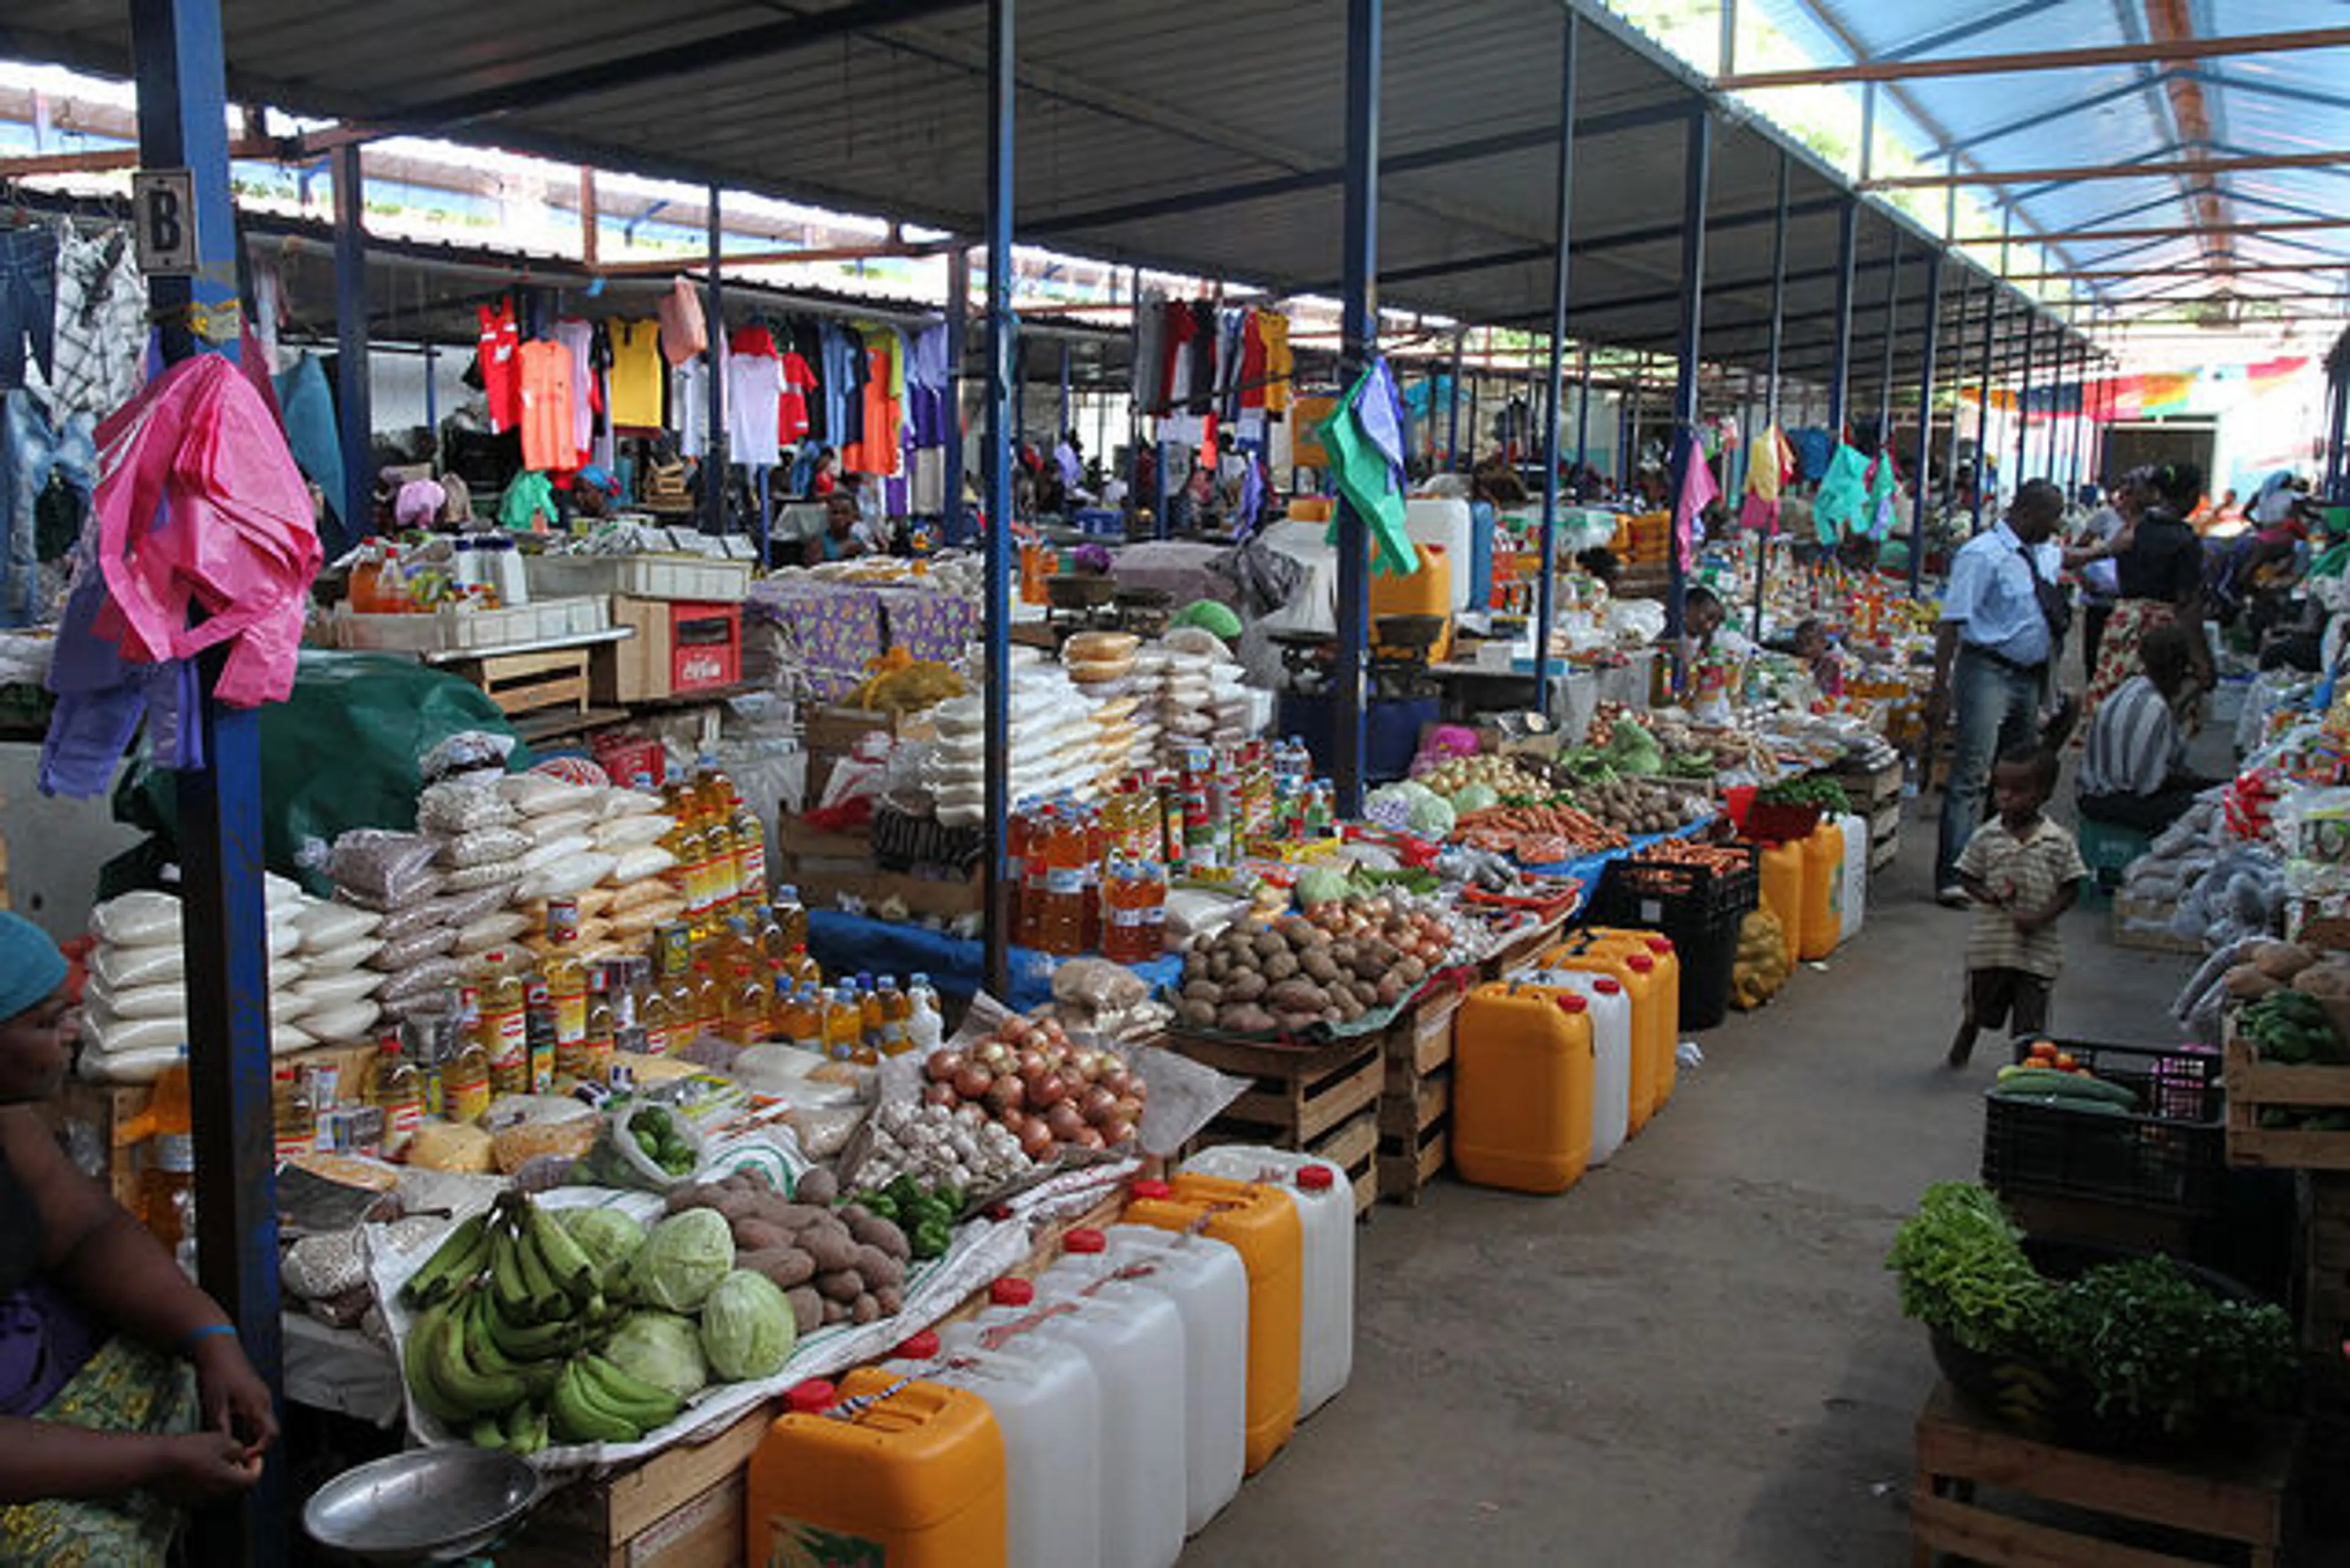 Praia local market